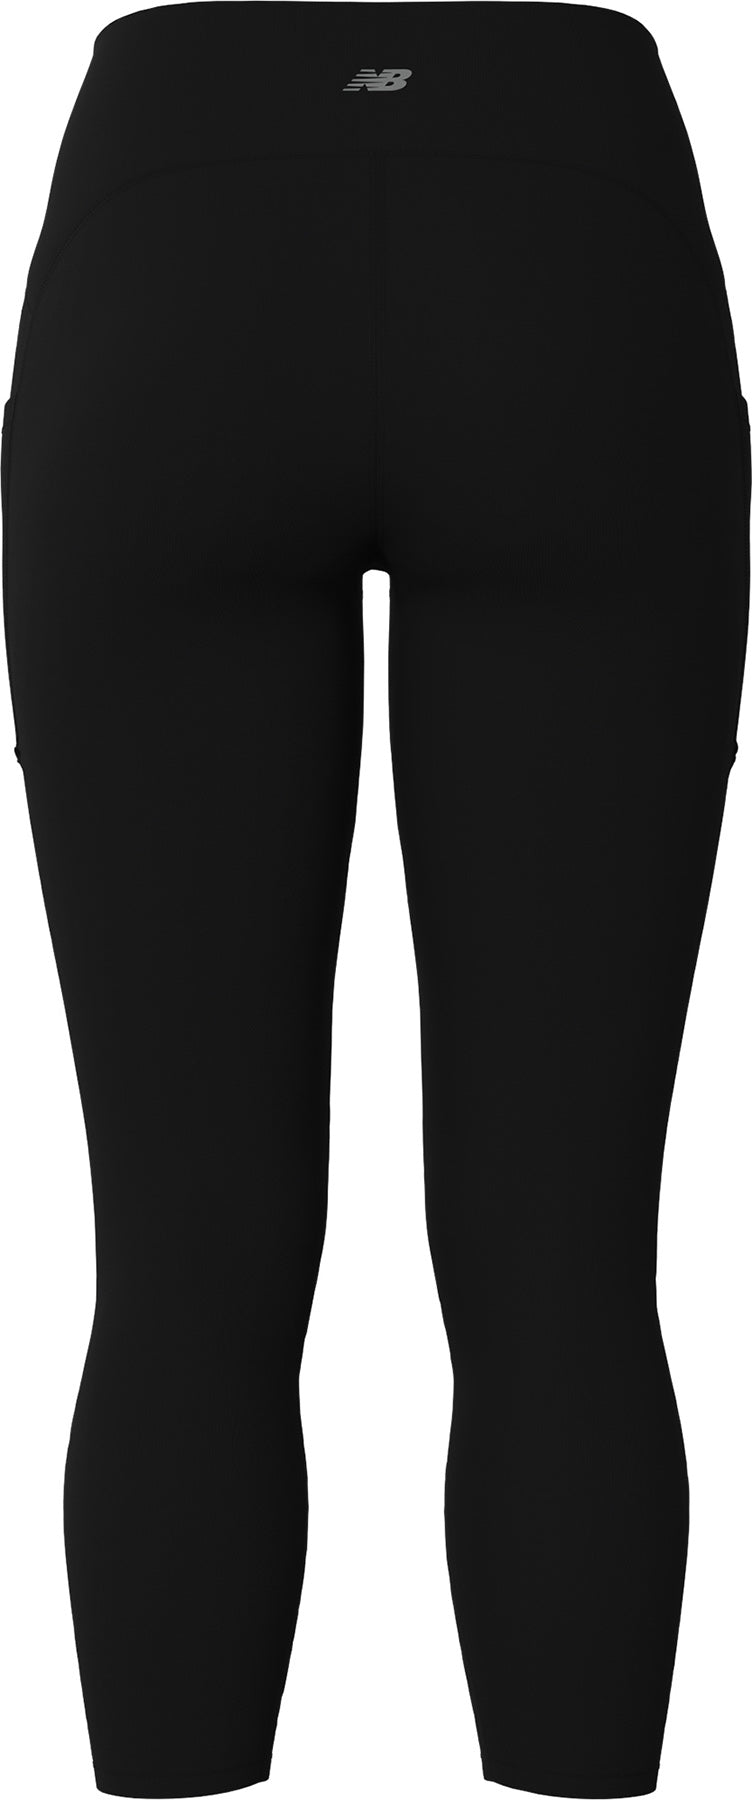 New Balance Sleek Pocket High Rise Legging 23 - Women's